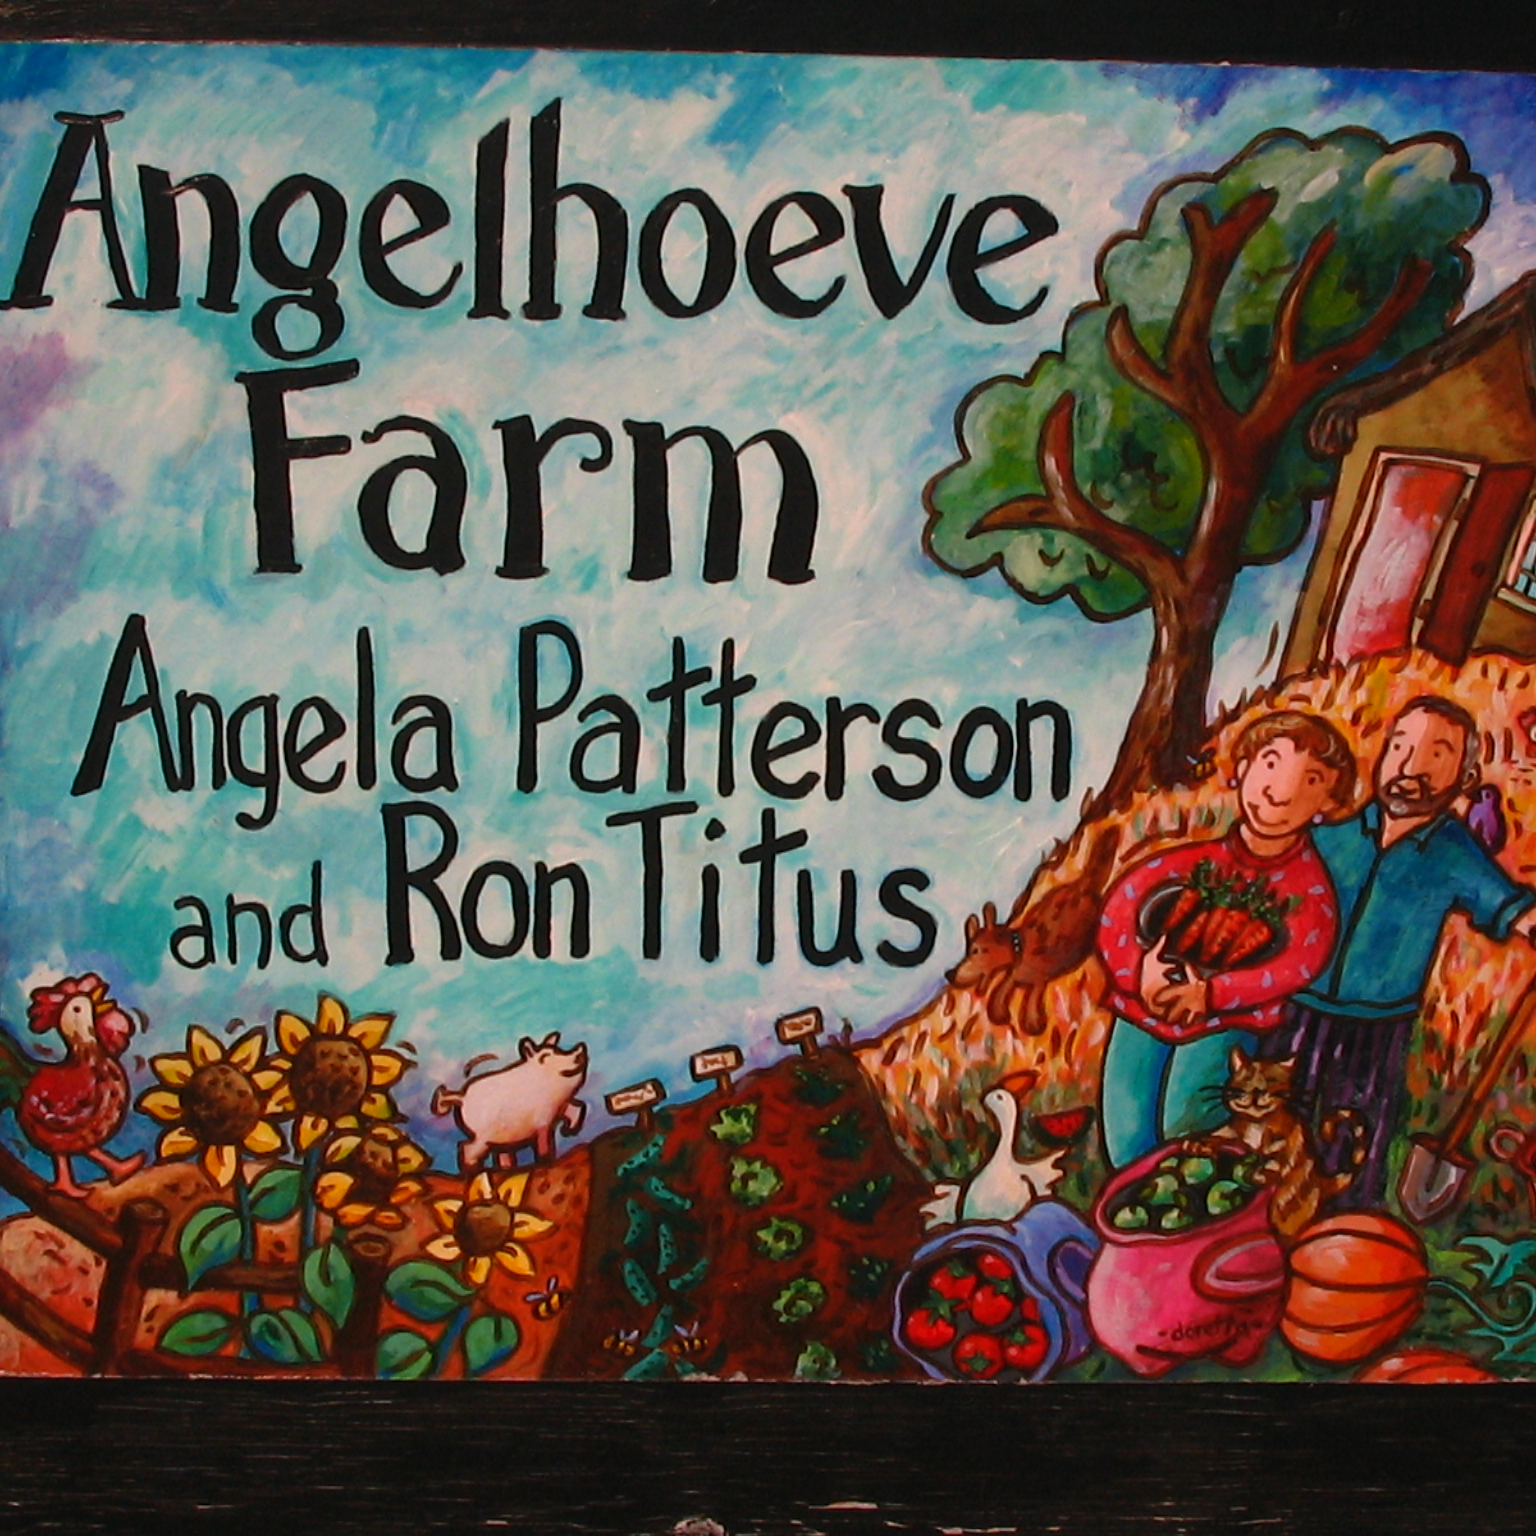 Angelhoeve Farm